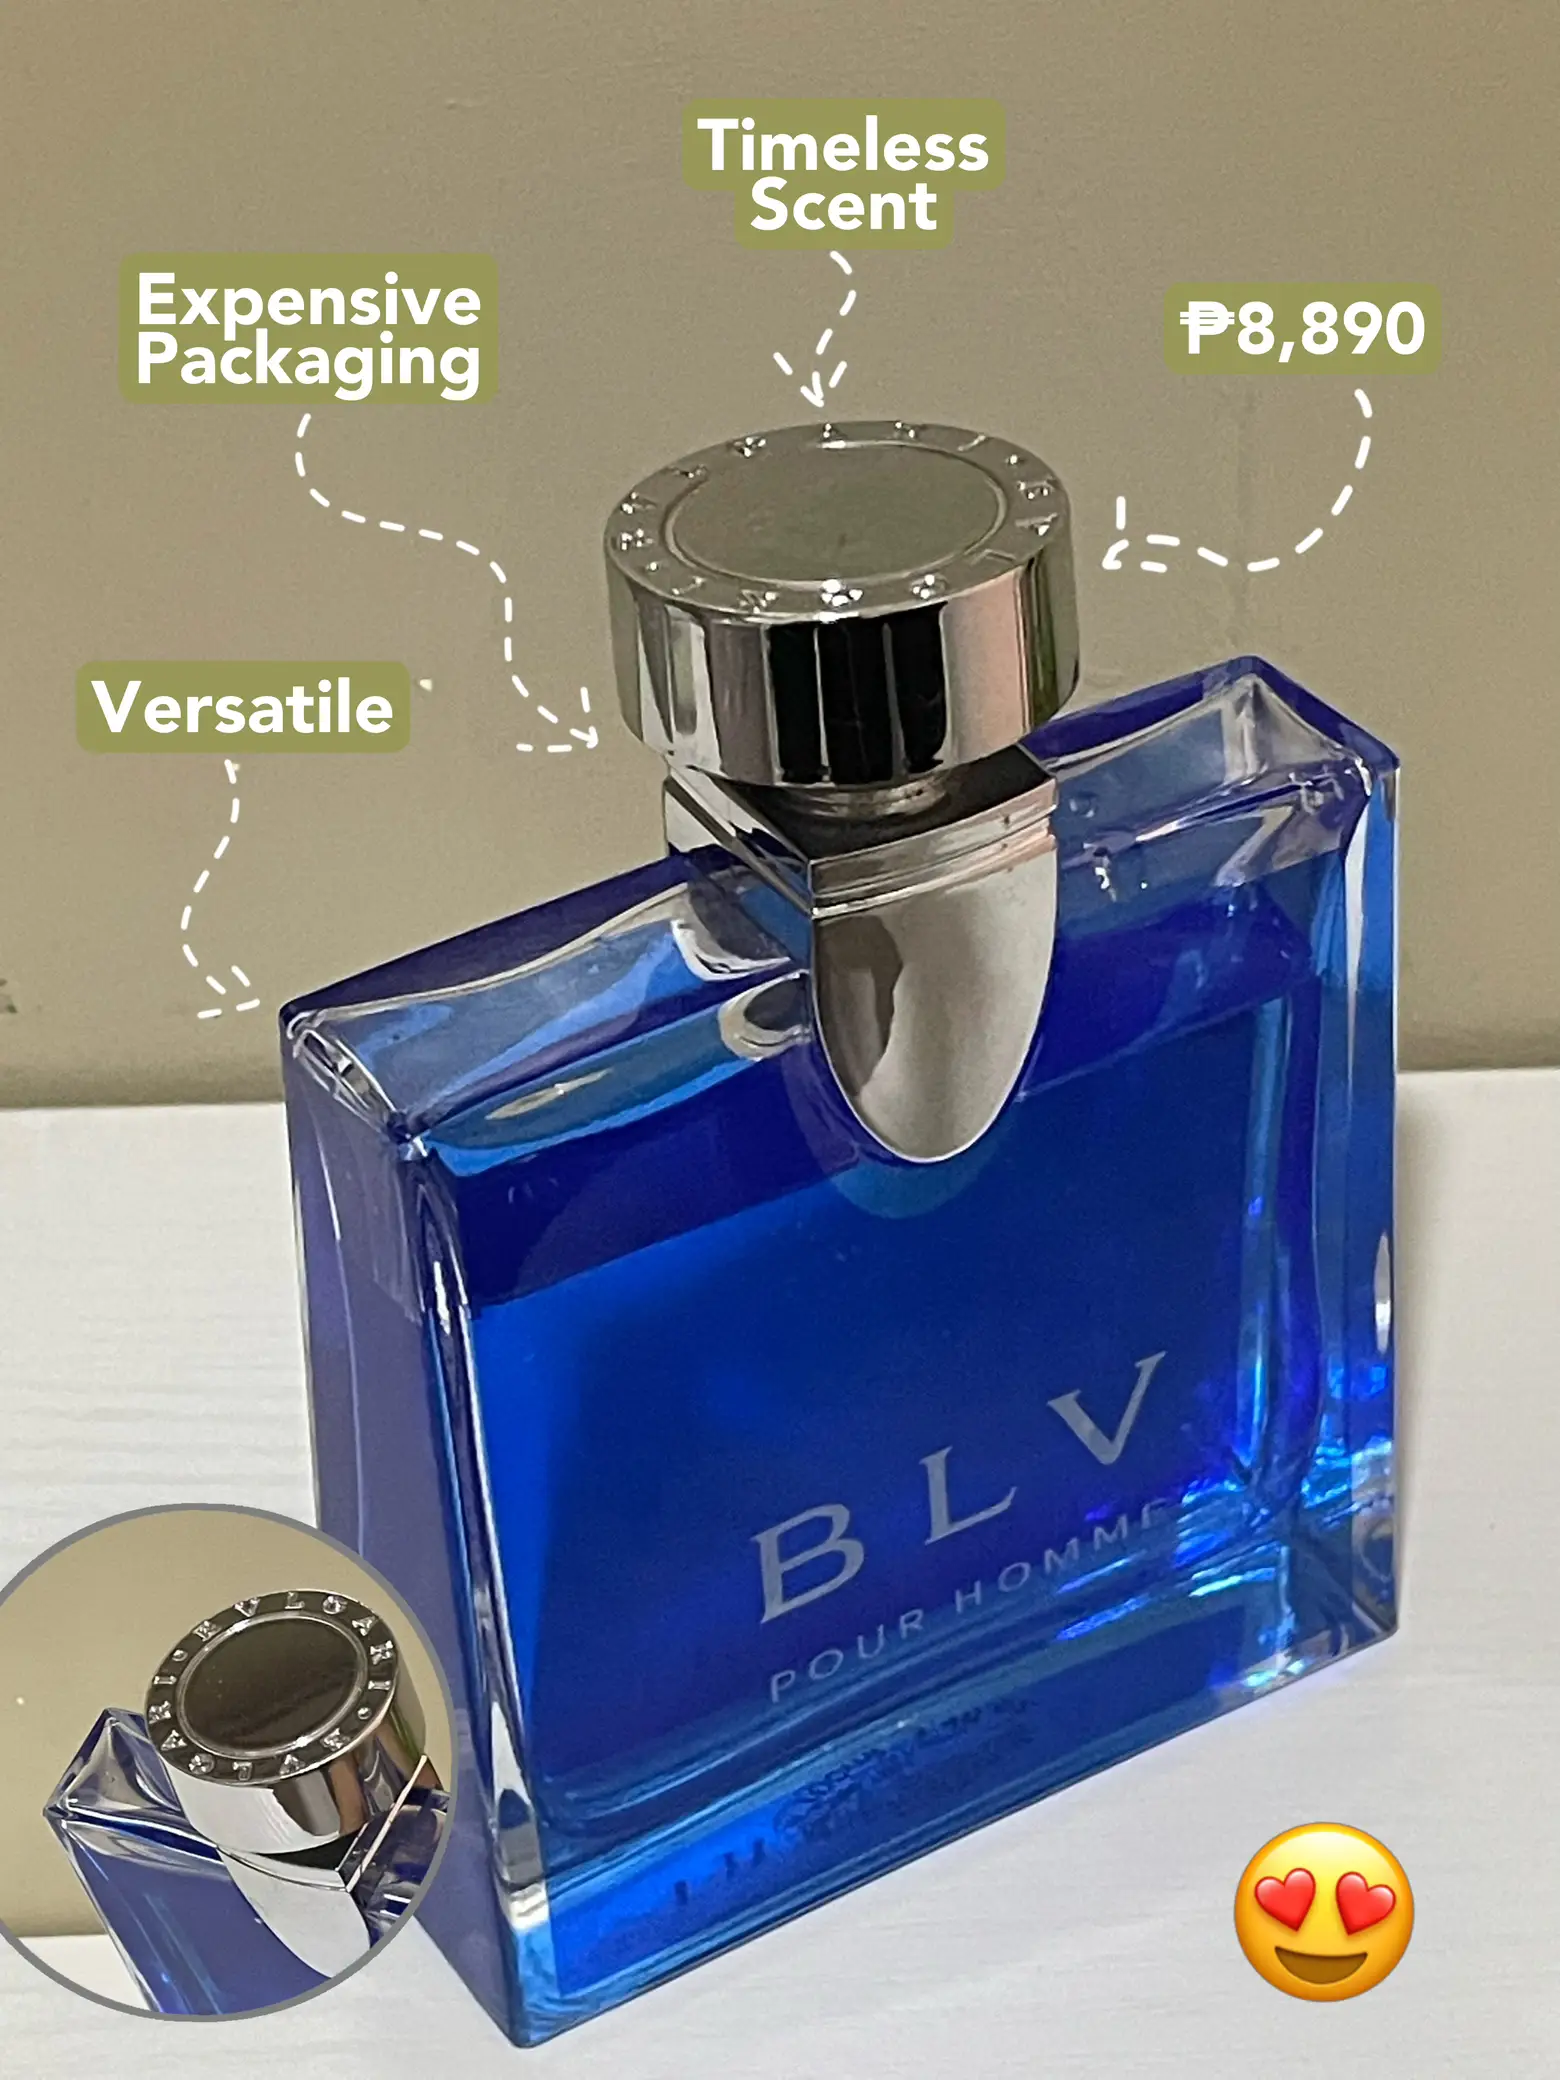 Review BLEU DE CHANEL eau parfum for men, Gallery posted by Nita Agustin